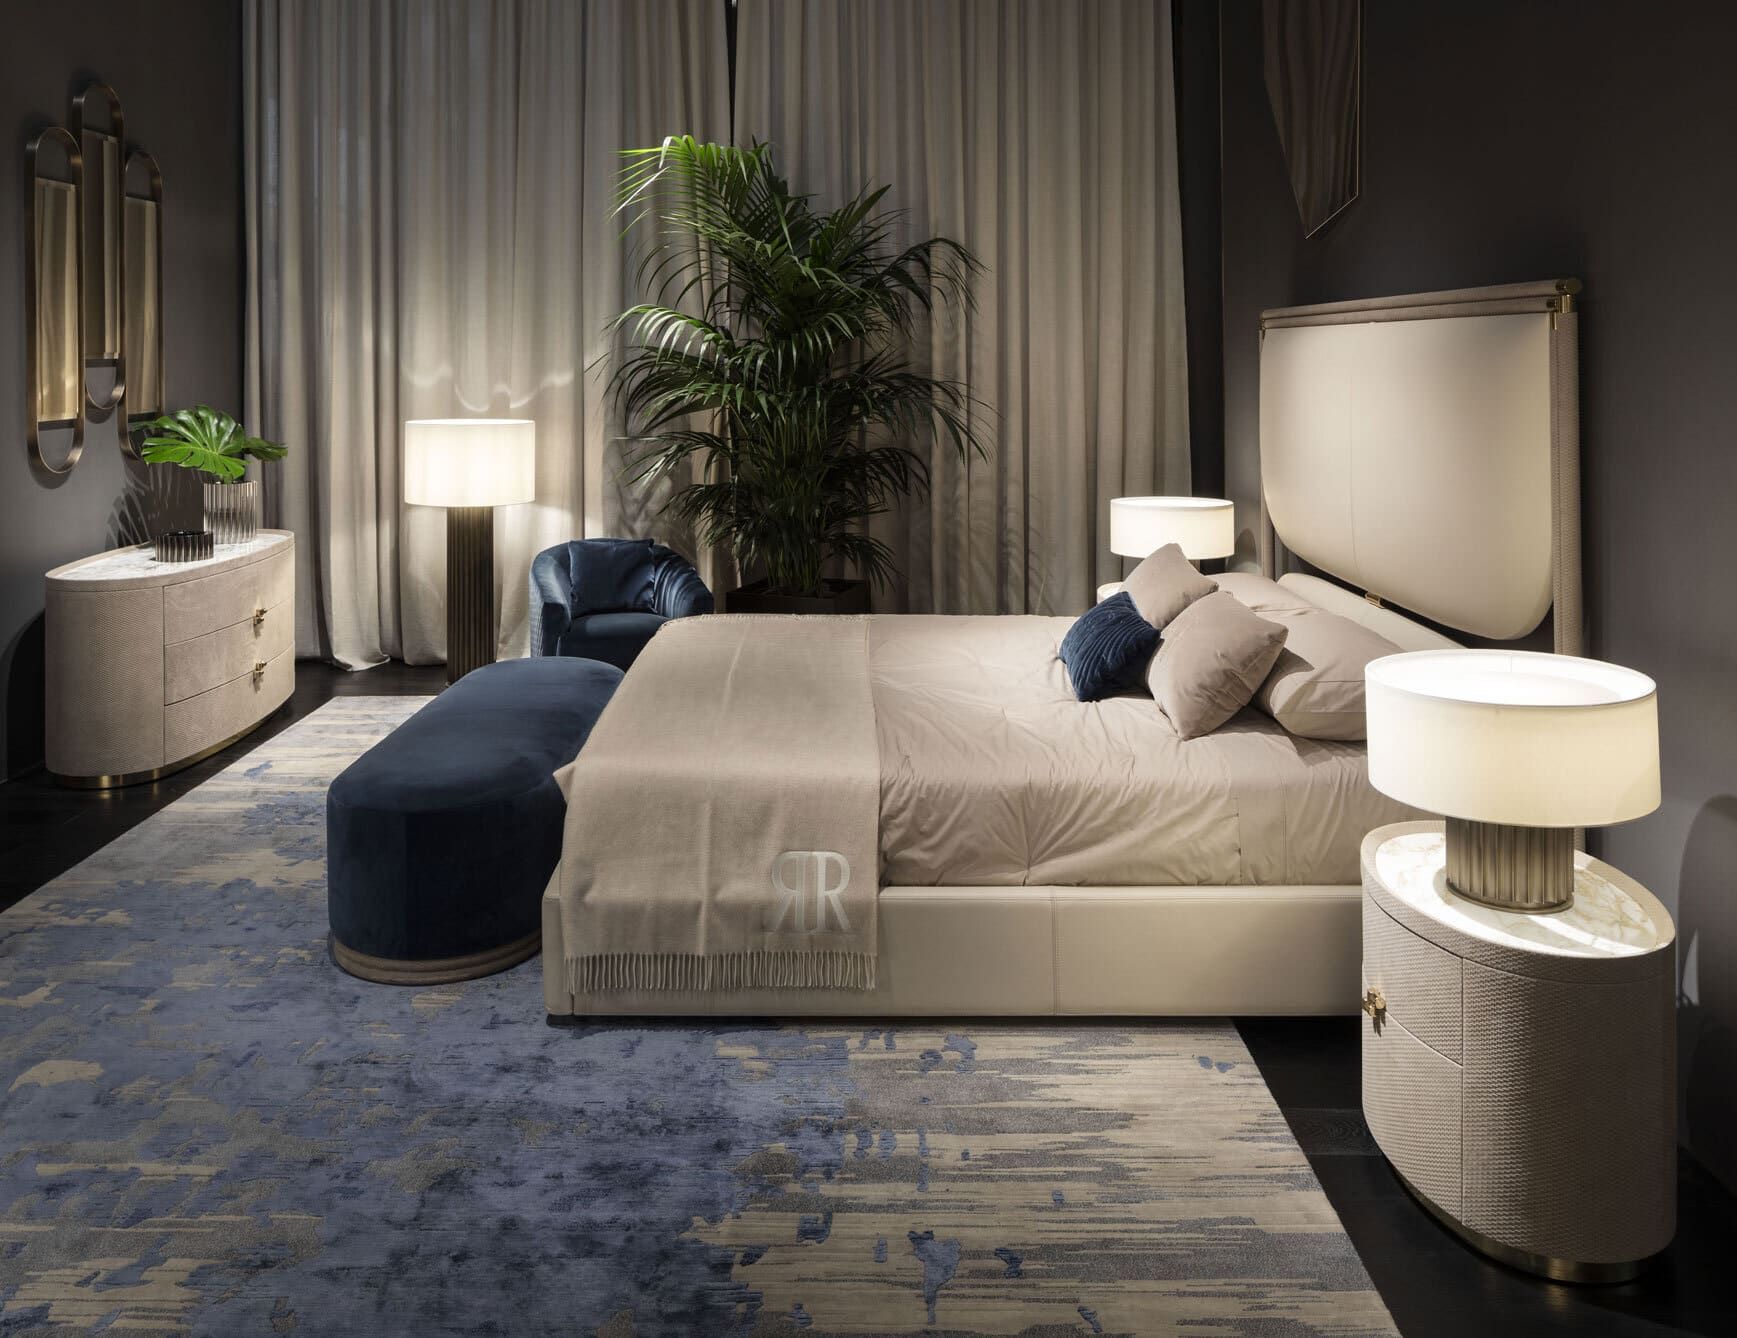 Boheme modern luxury bed with cream leather